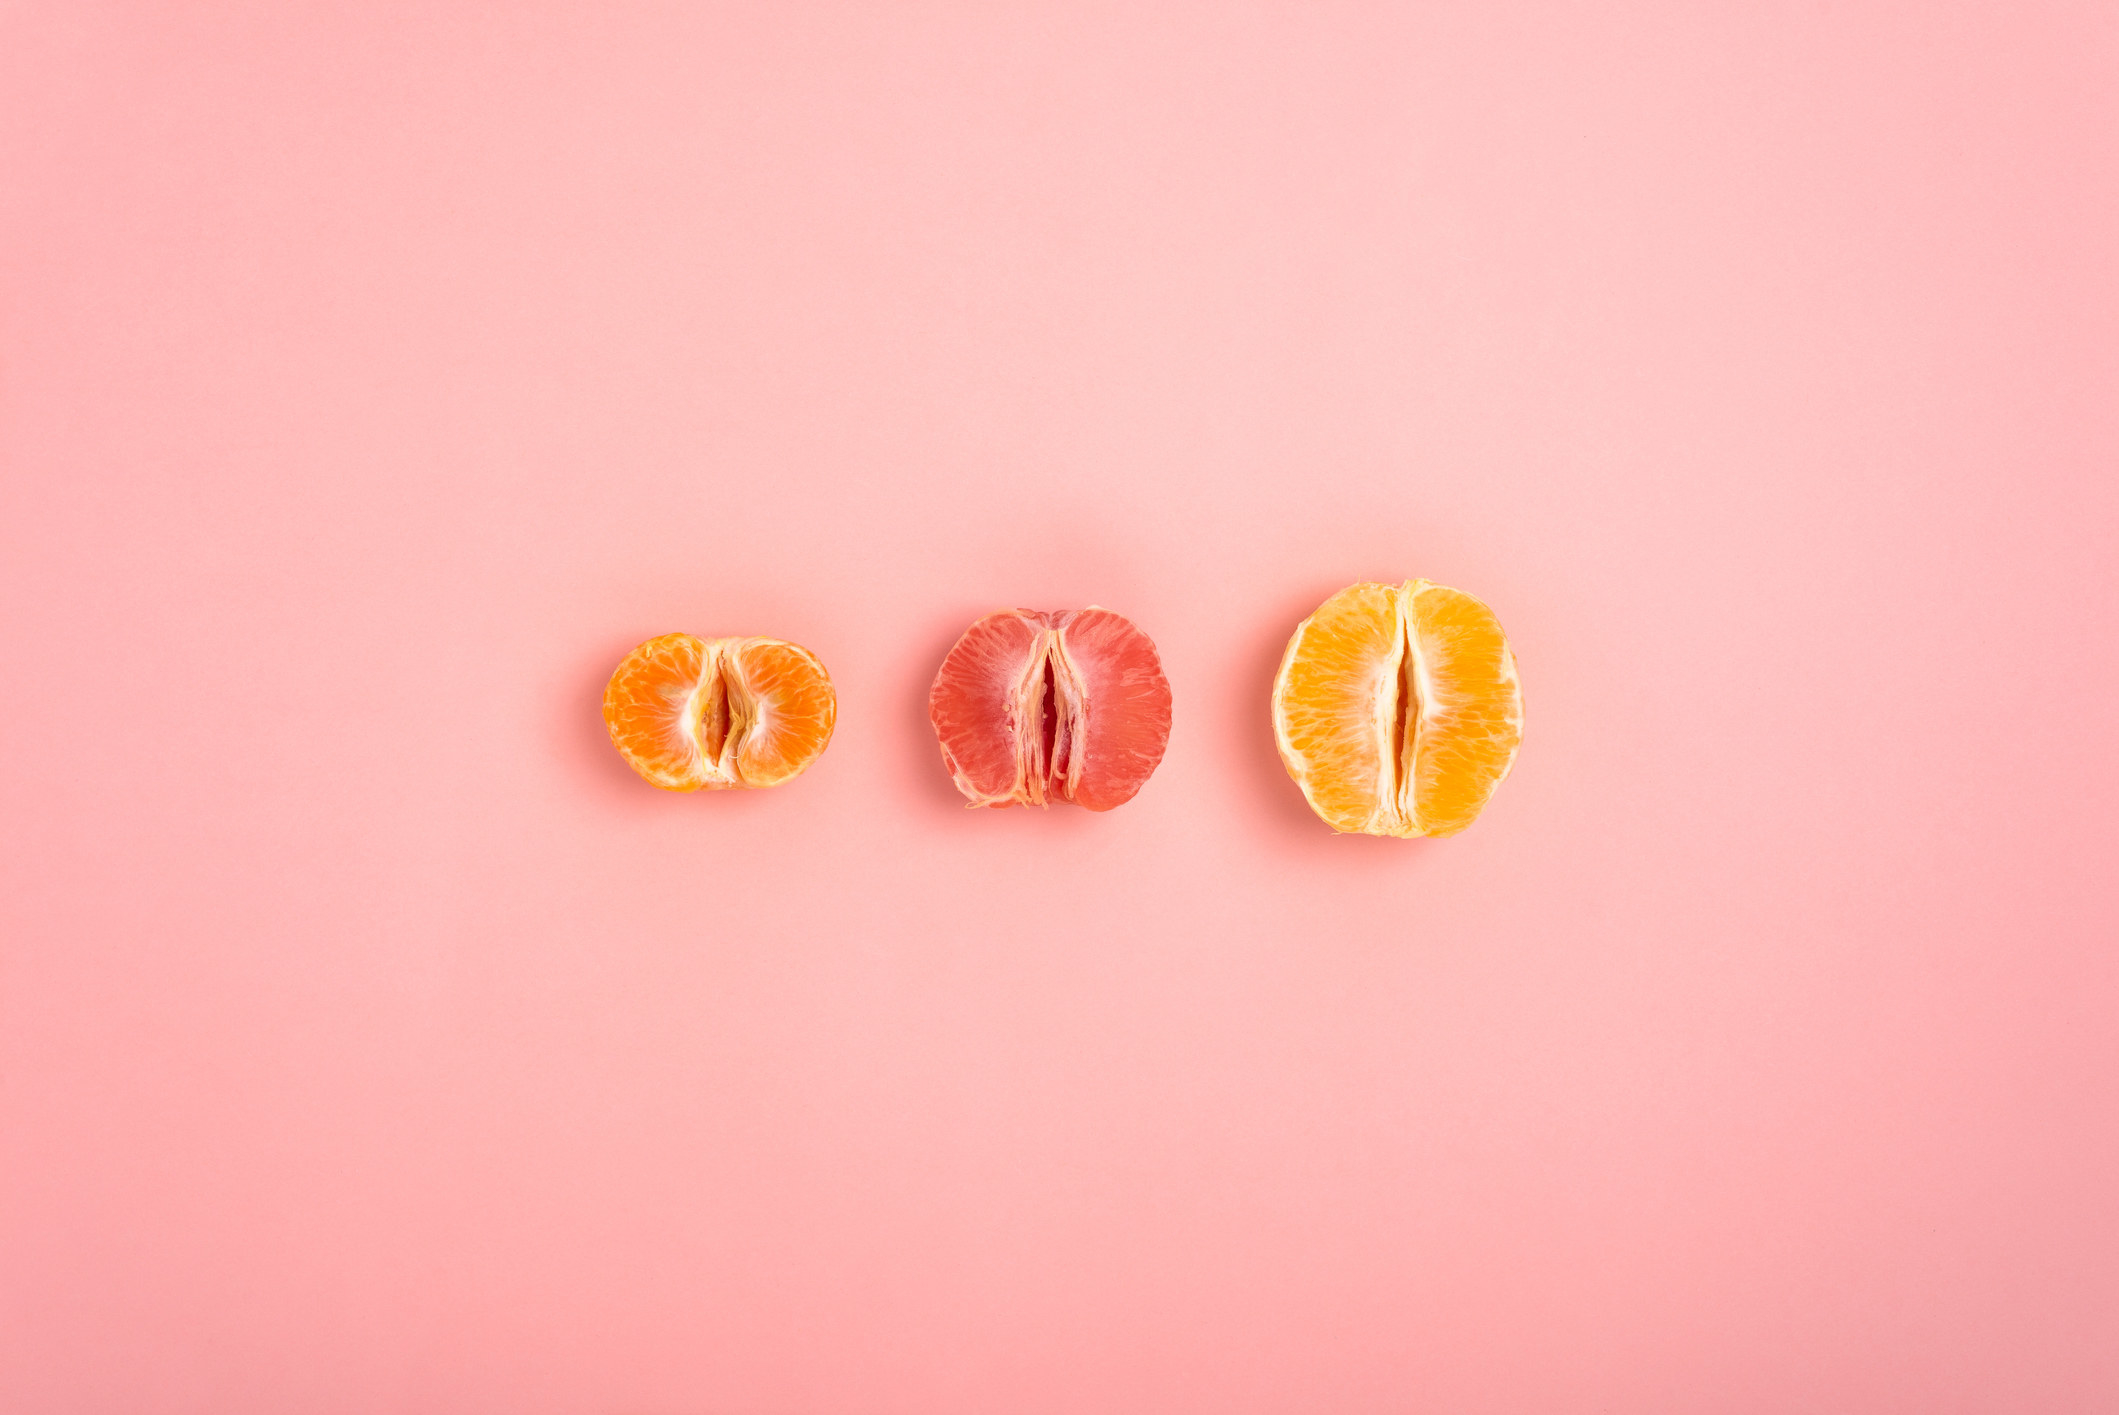 tangerine, grapefruit and orange cut in half on a peach background